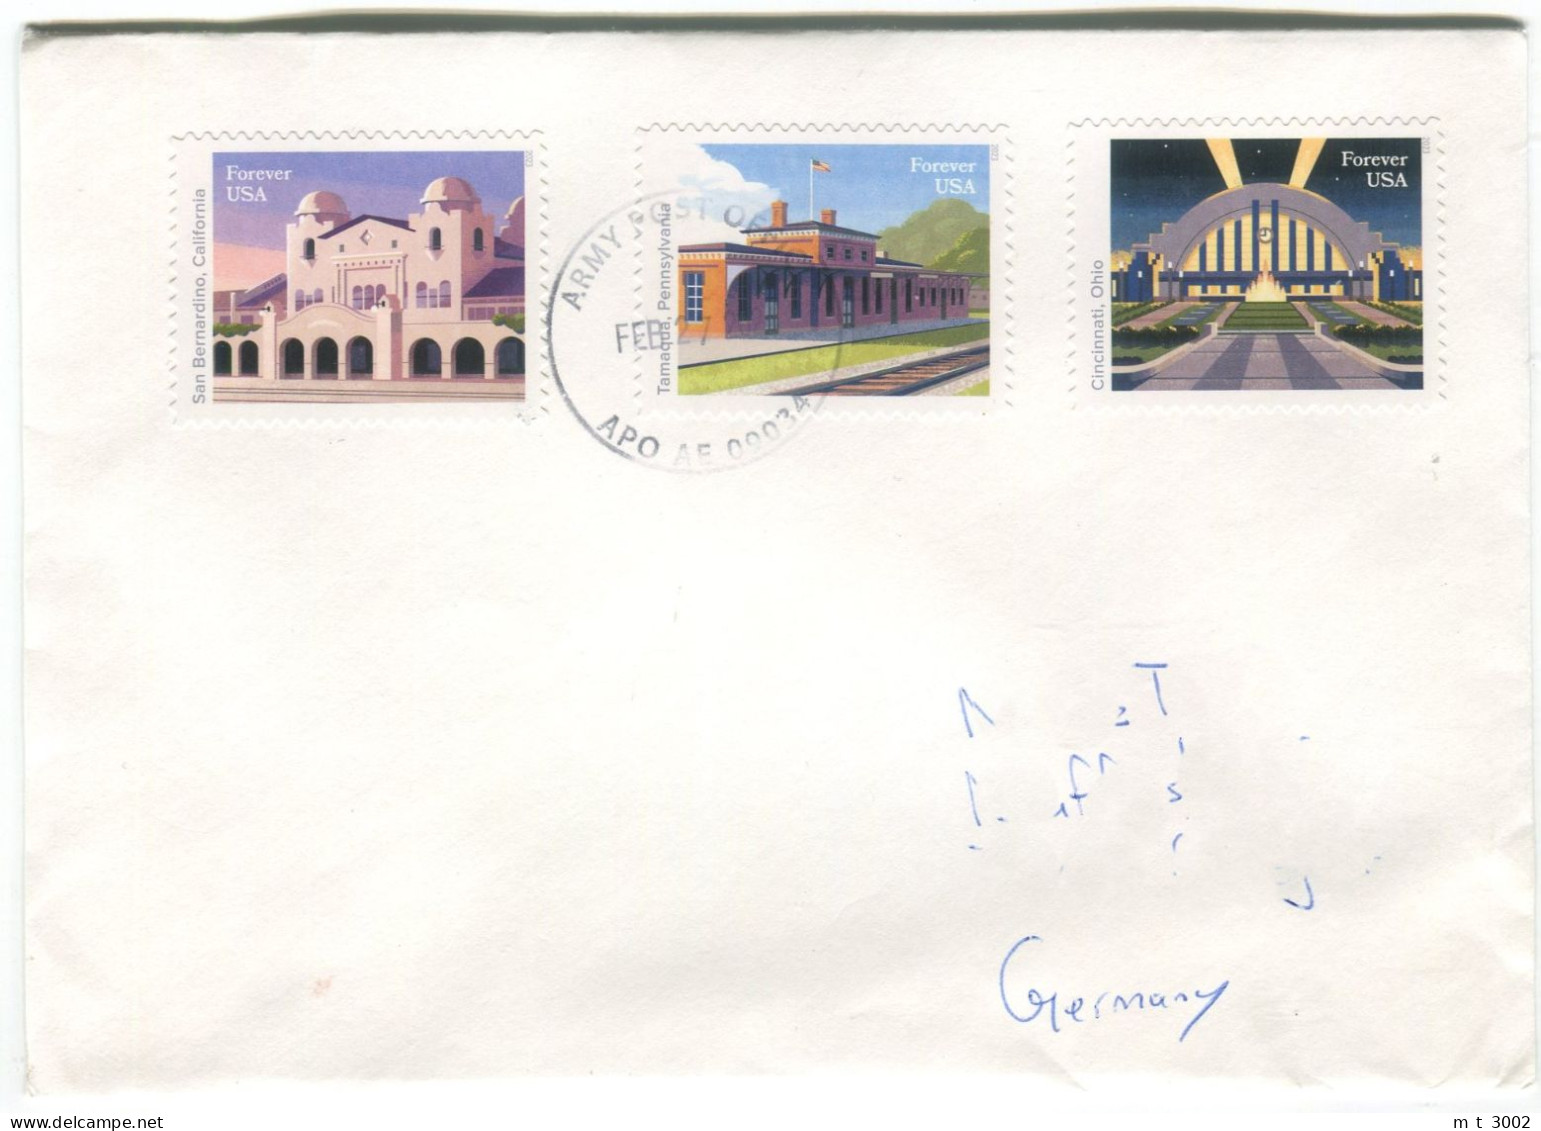 Cover APO 09034 Germany Baumholder 2024 Postmaster - Storia Postale